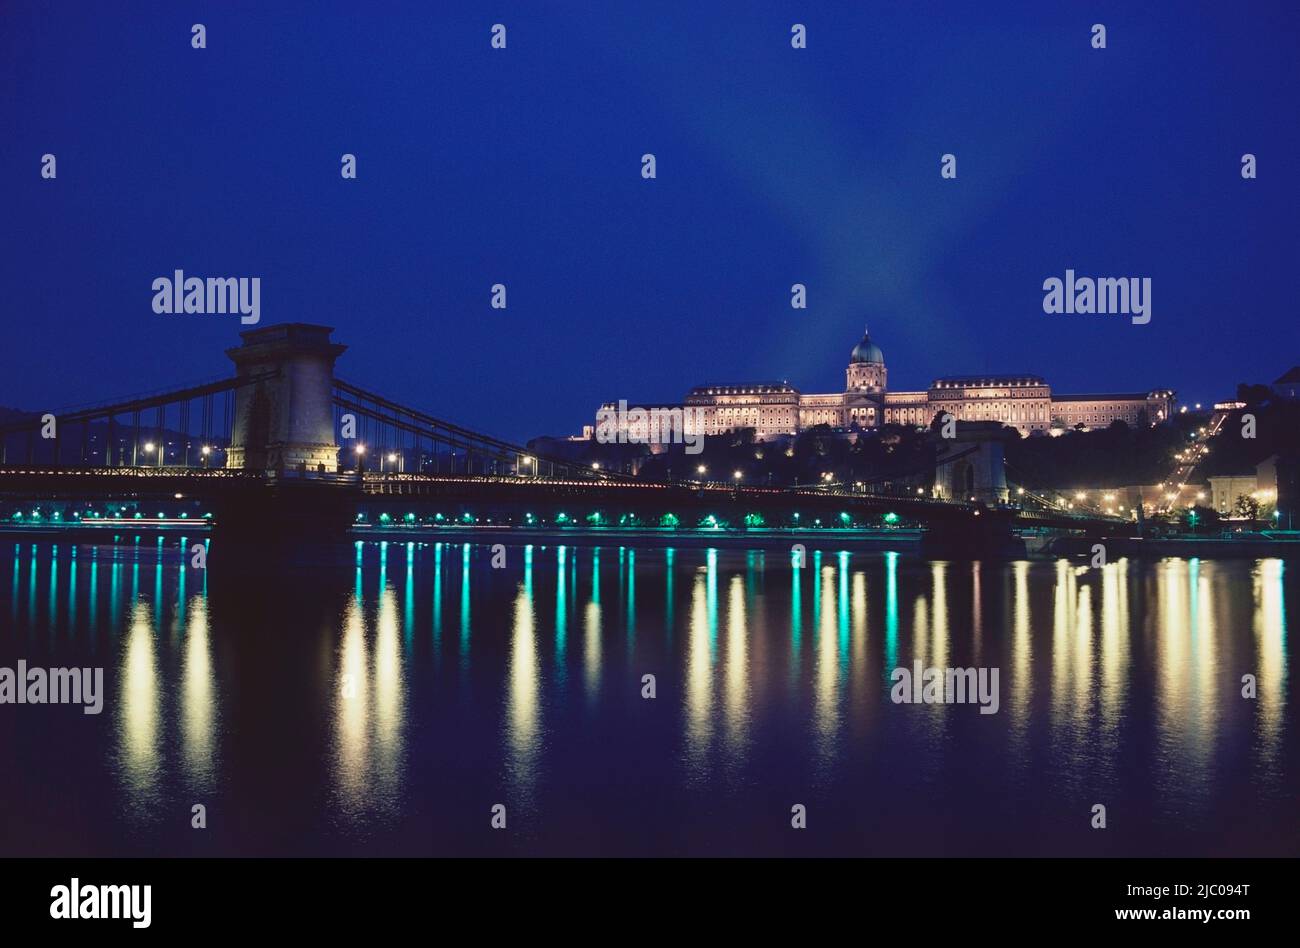 City lit up at night, Chain Bridge, Danube River, Royal Palace Of Buda, Budapest, Hungary Stock Photo